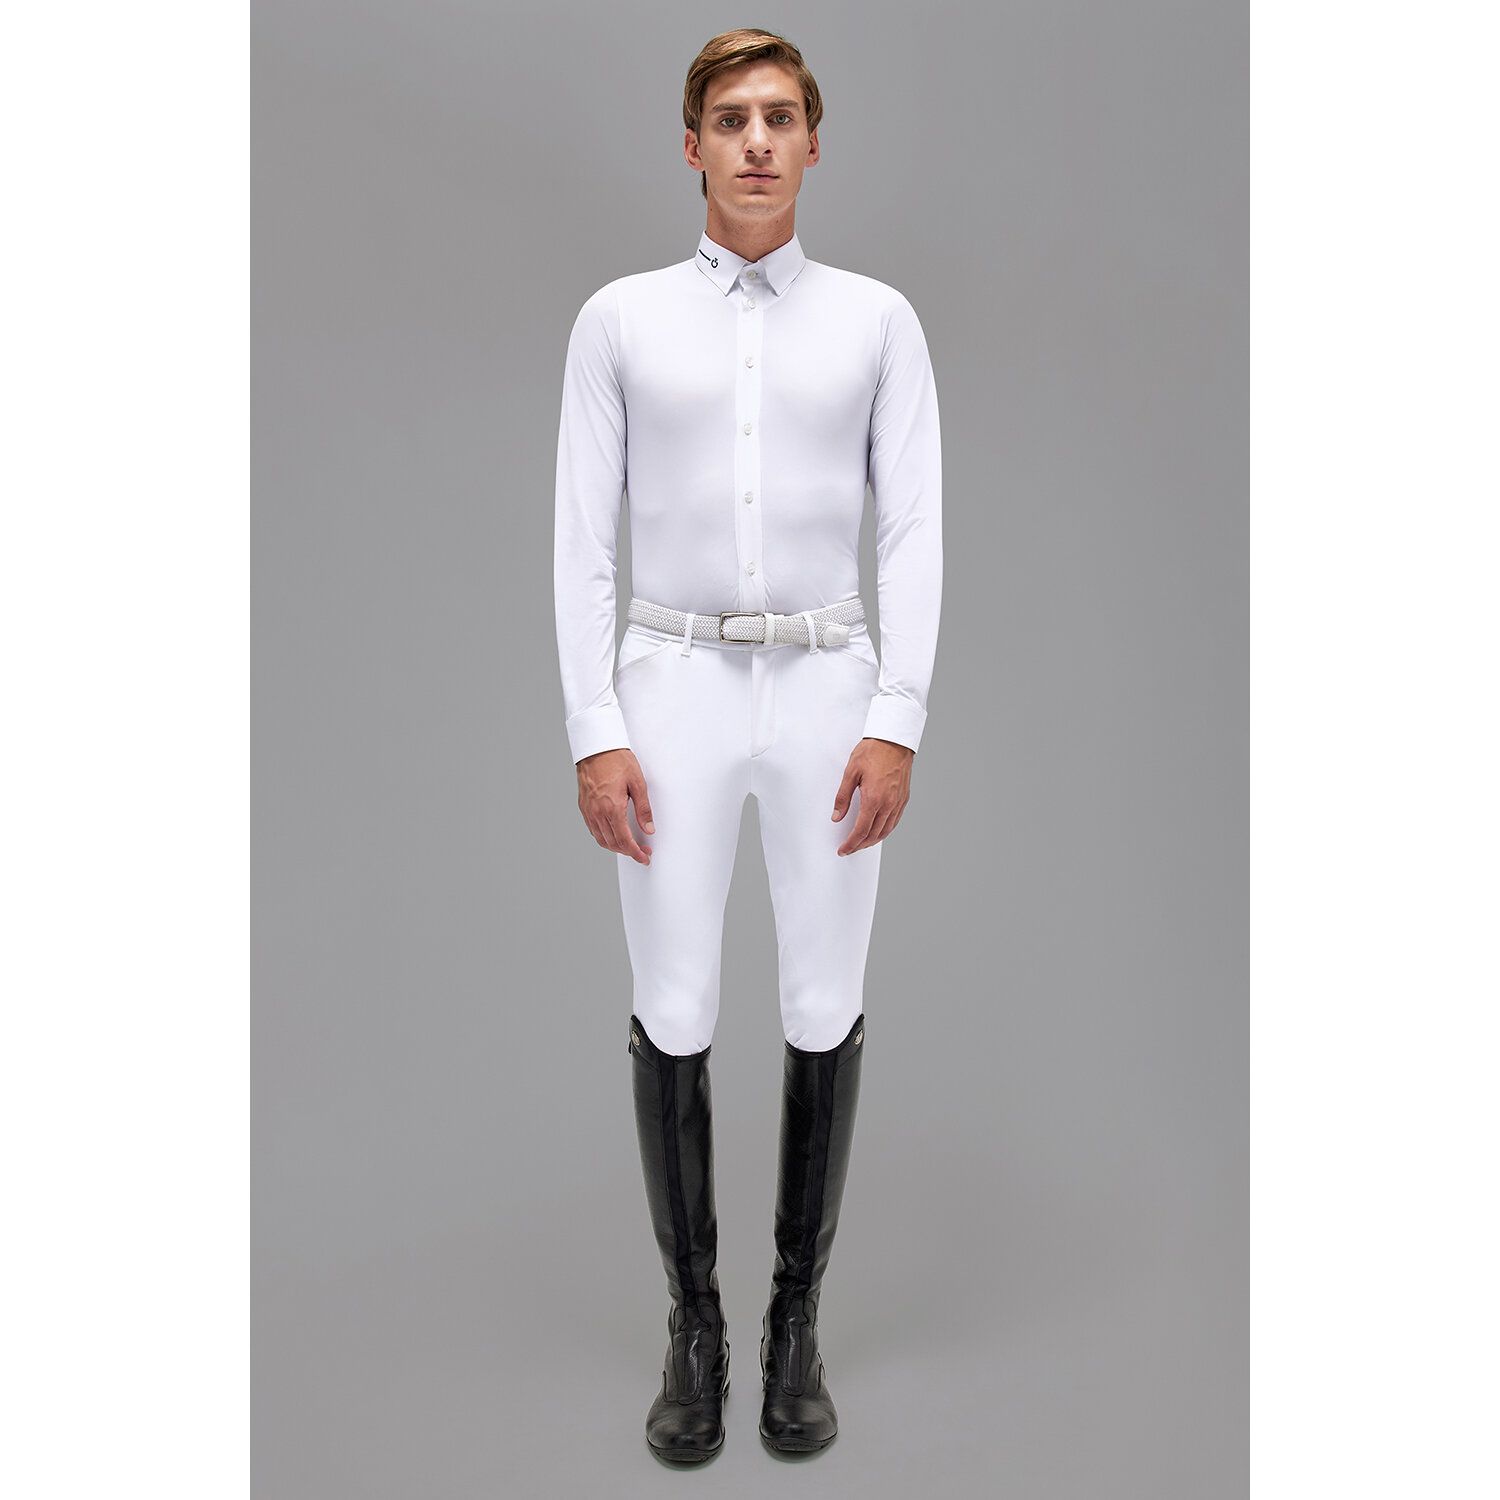 Cavalleria Toscana Revo Men's Competition Shirt WHITE-2